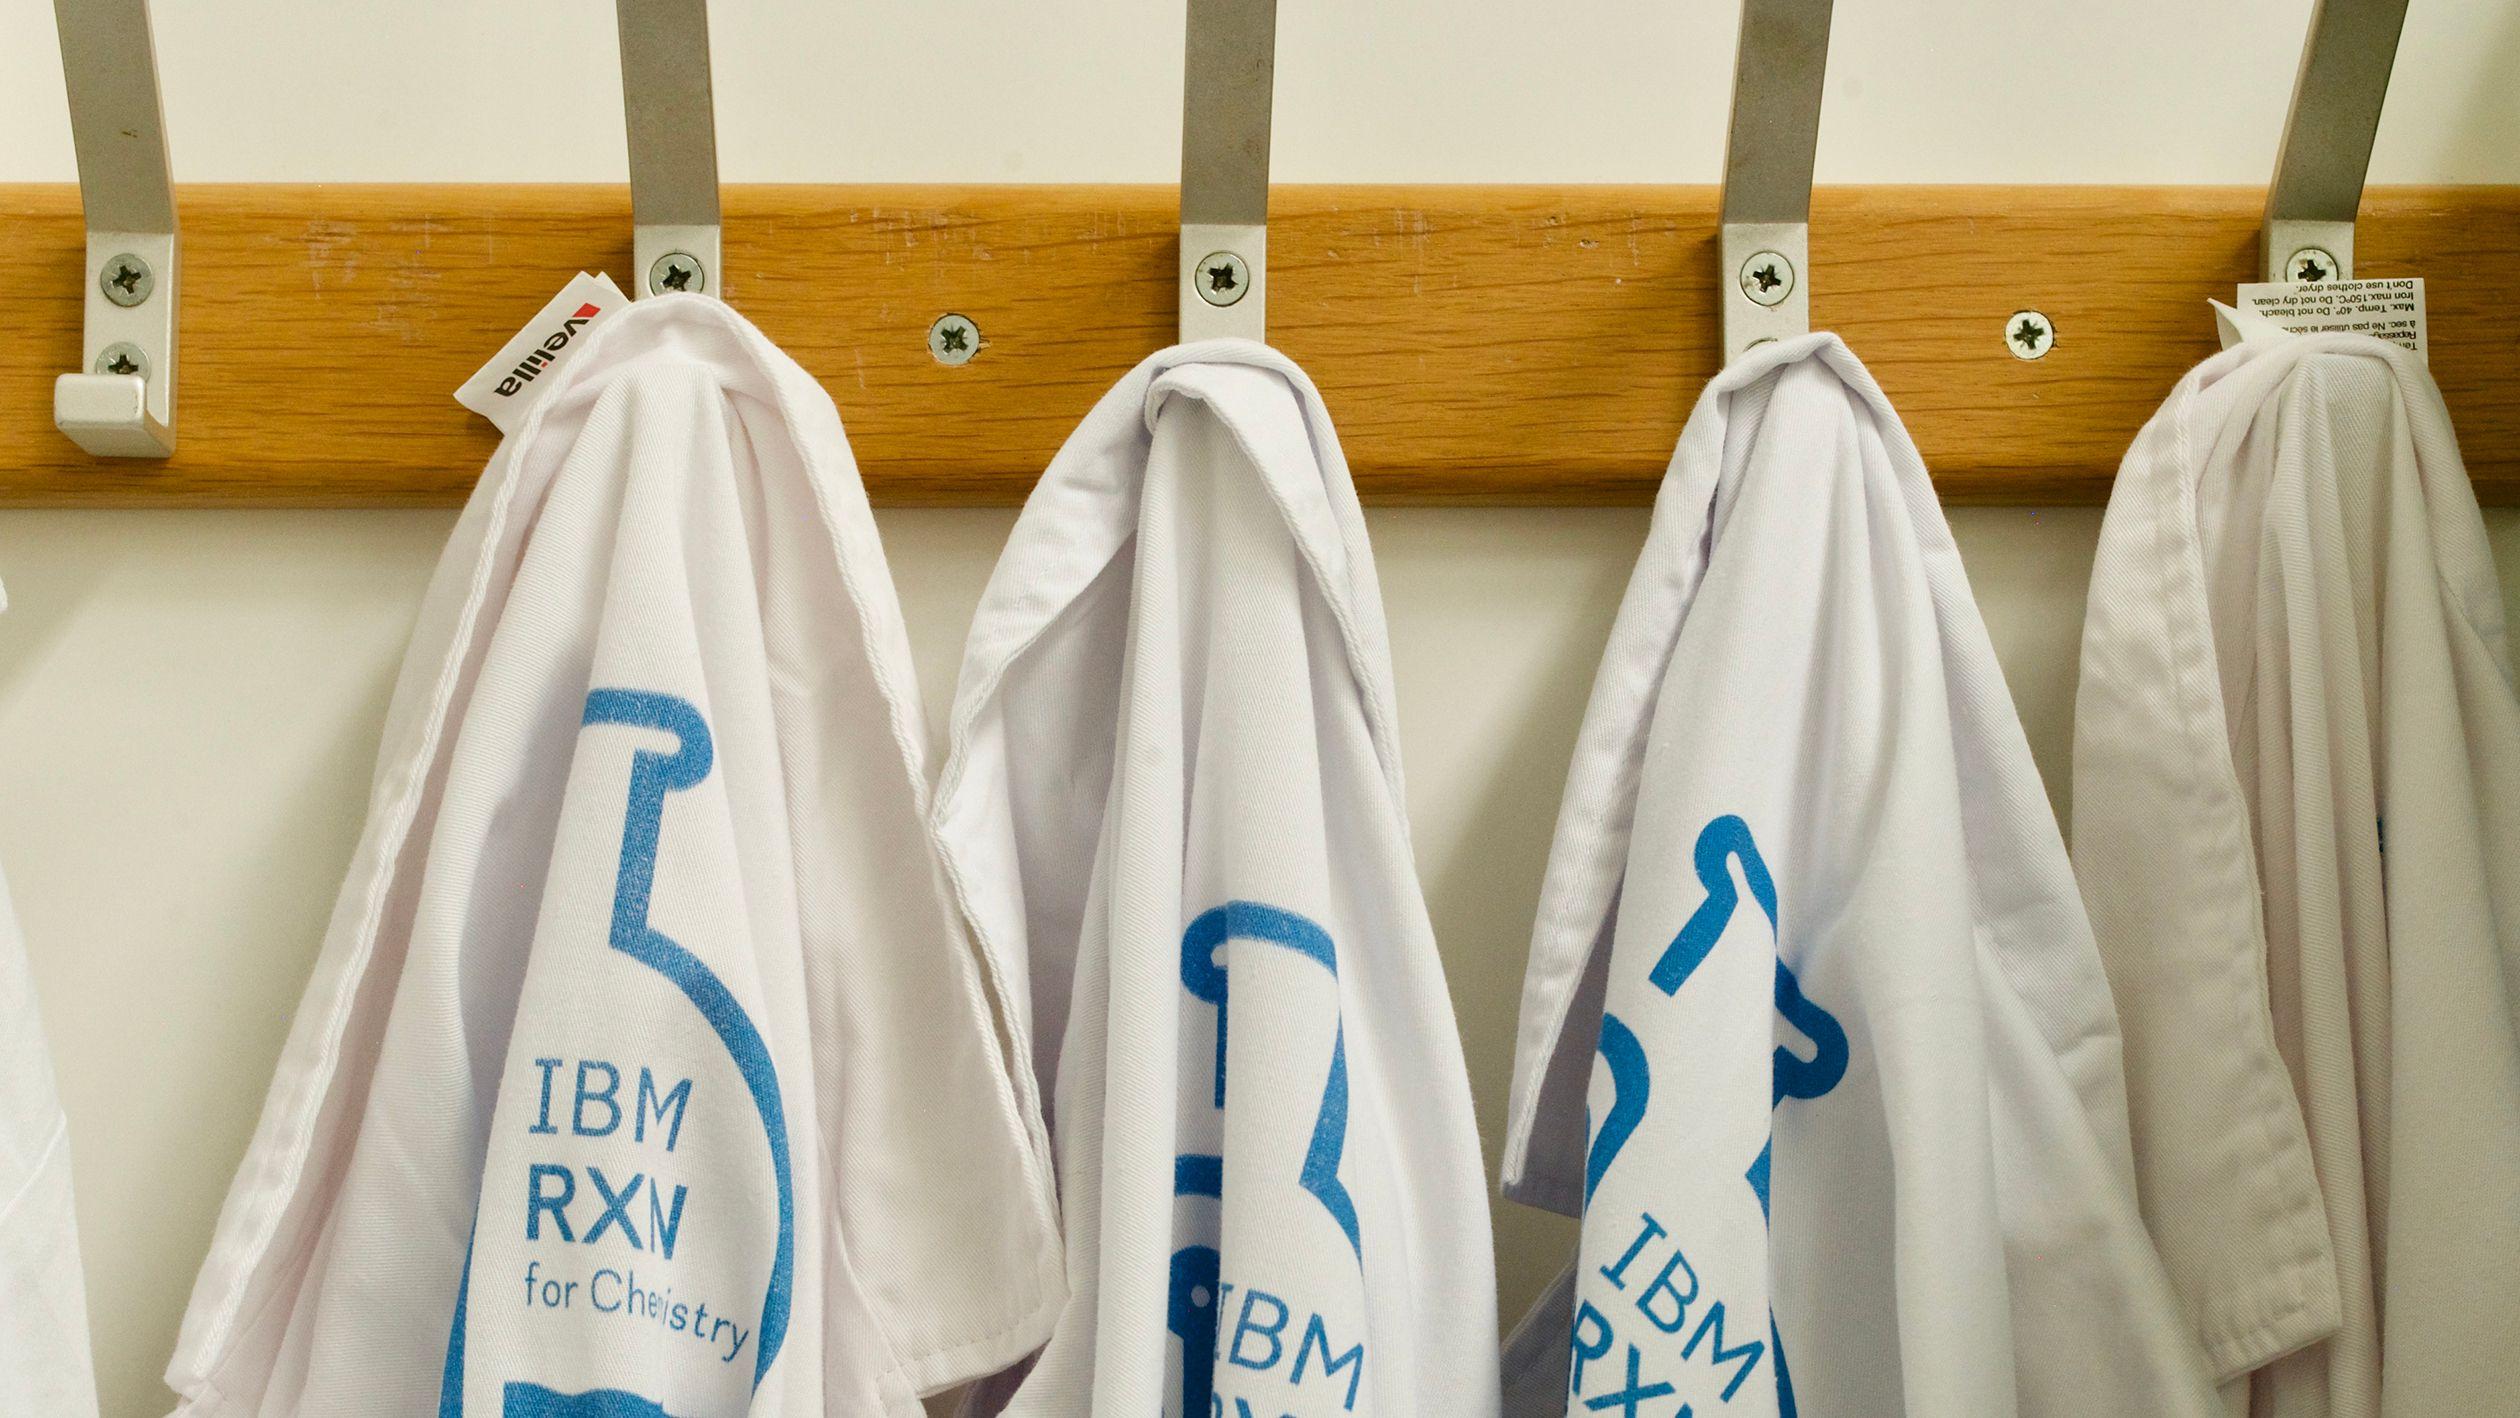 IBM RXN lab coats